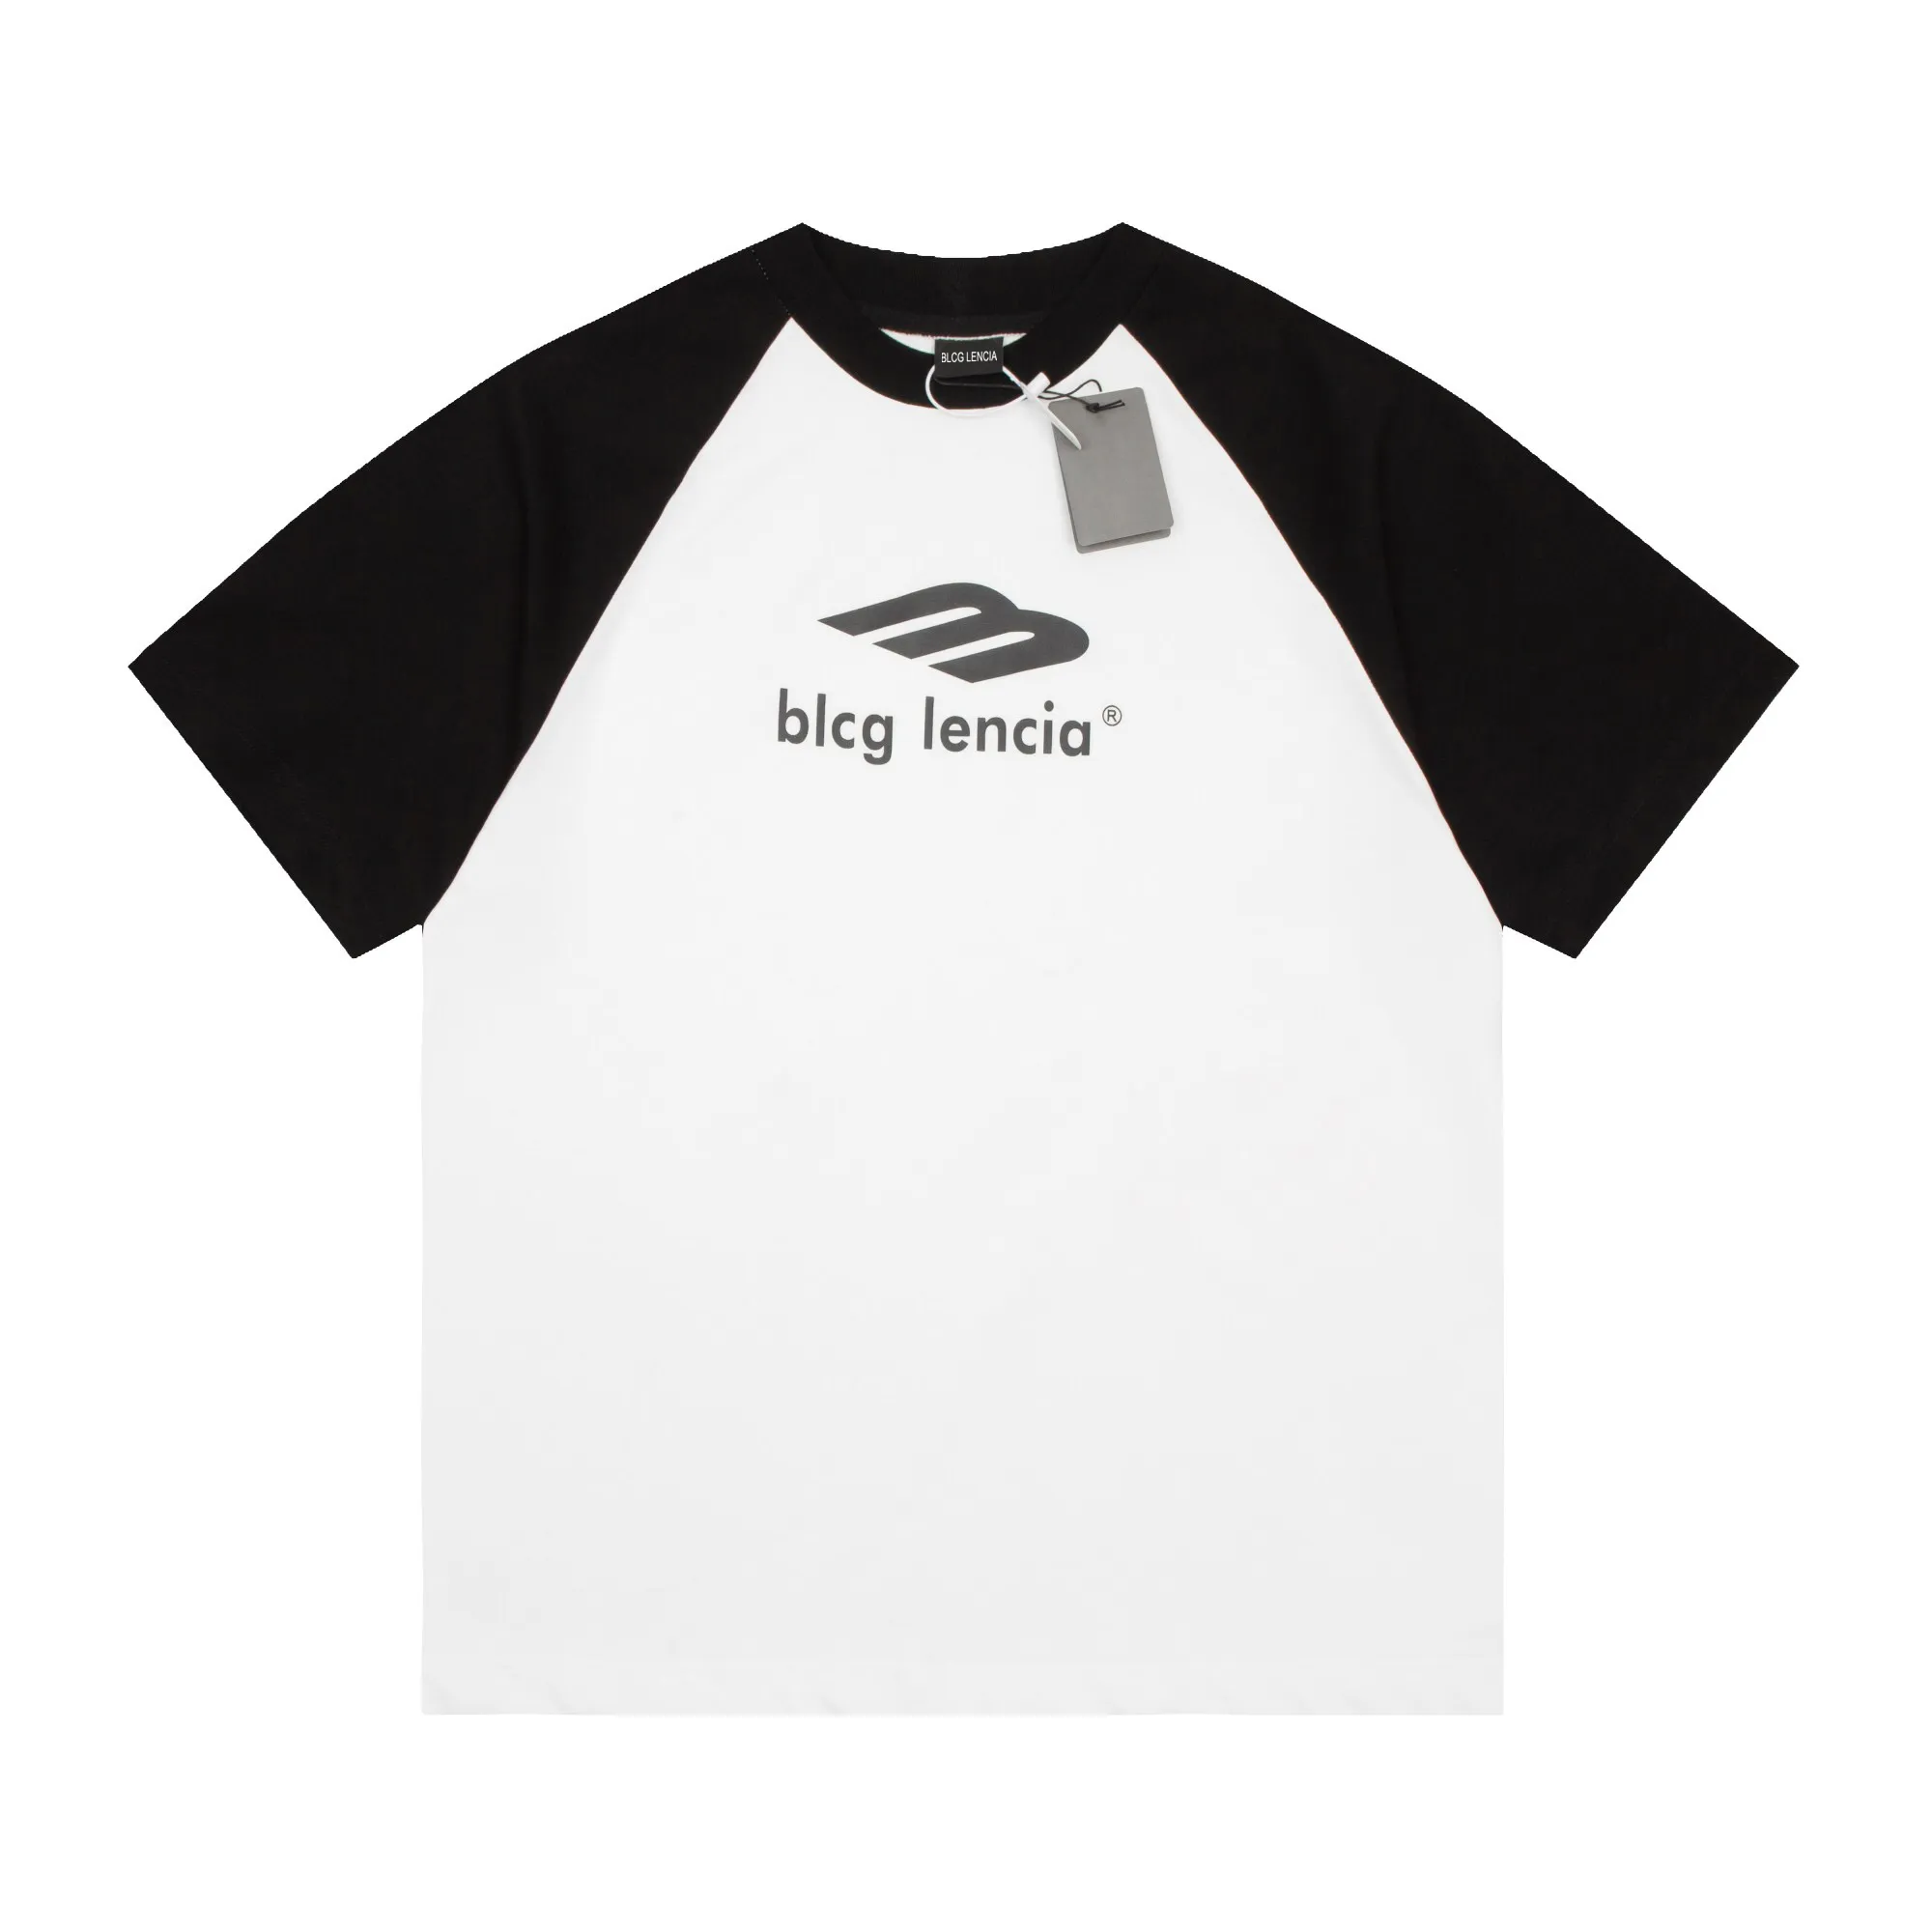 BLCG LENCIA 여름 티셔츠 하이 스트리트 힙합 스타일 100% 면적 품질의 남자와 여자 드롭 슬리브 느슨한 tshirts 오버 사이즈 23254